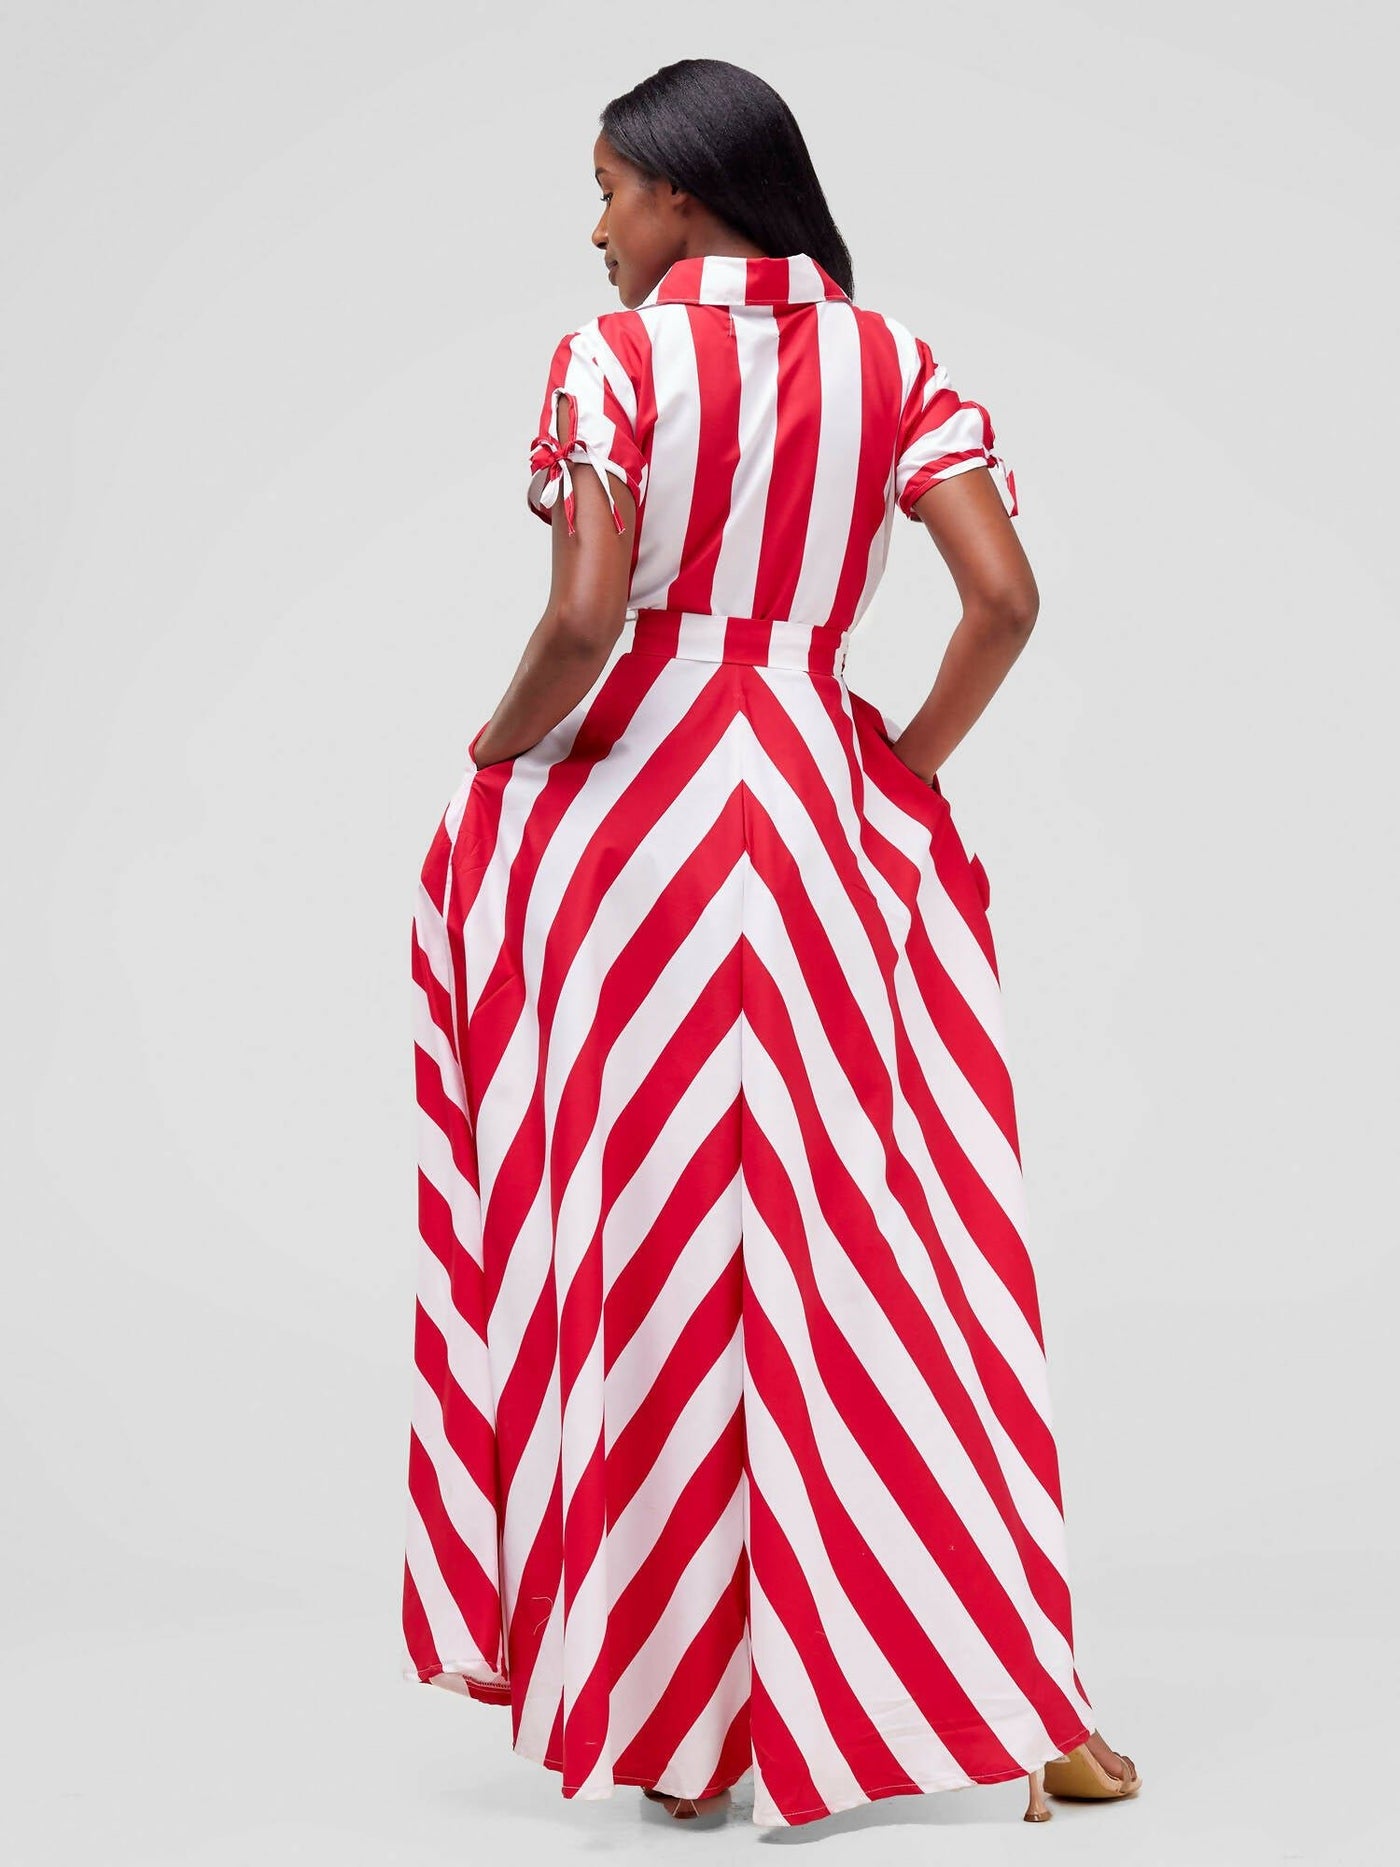 Steady Wear Keyhole Sleeved Maxi - Red / White Stripes - Shopzetu